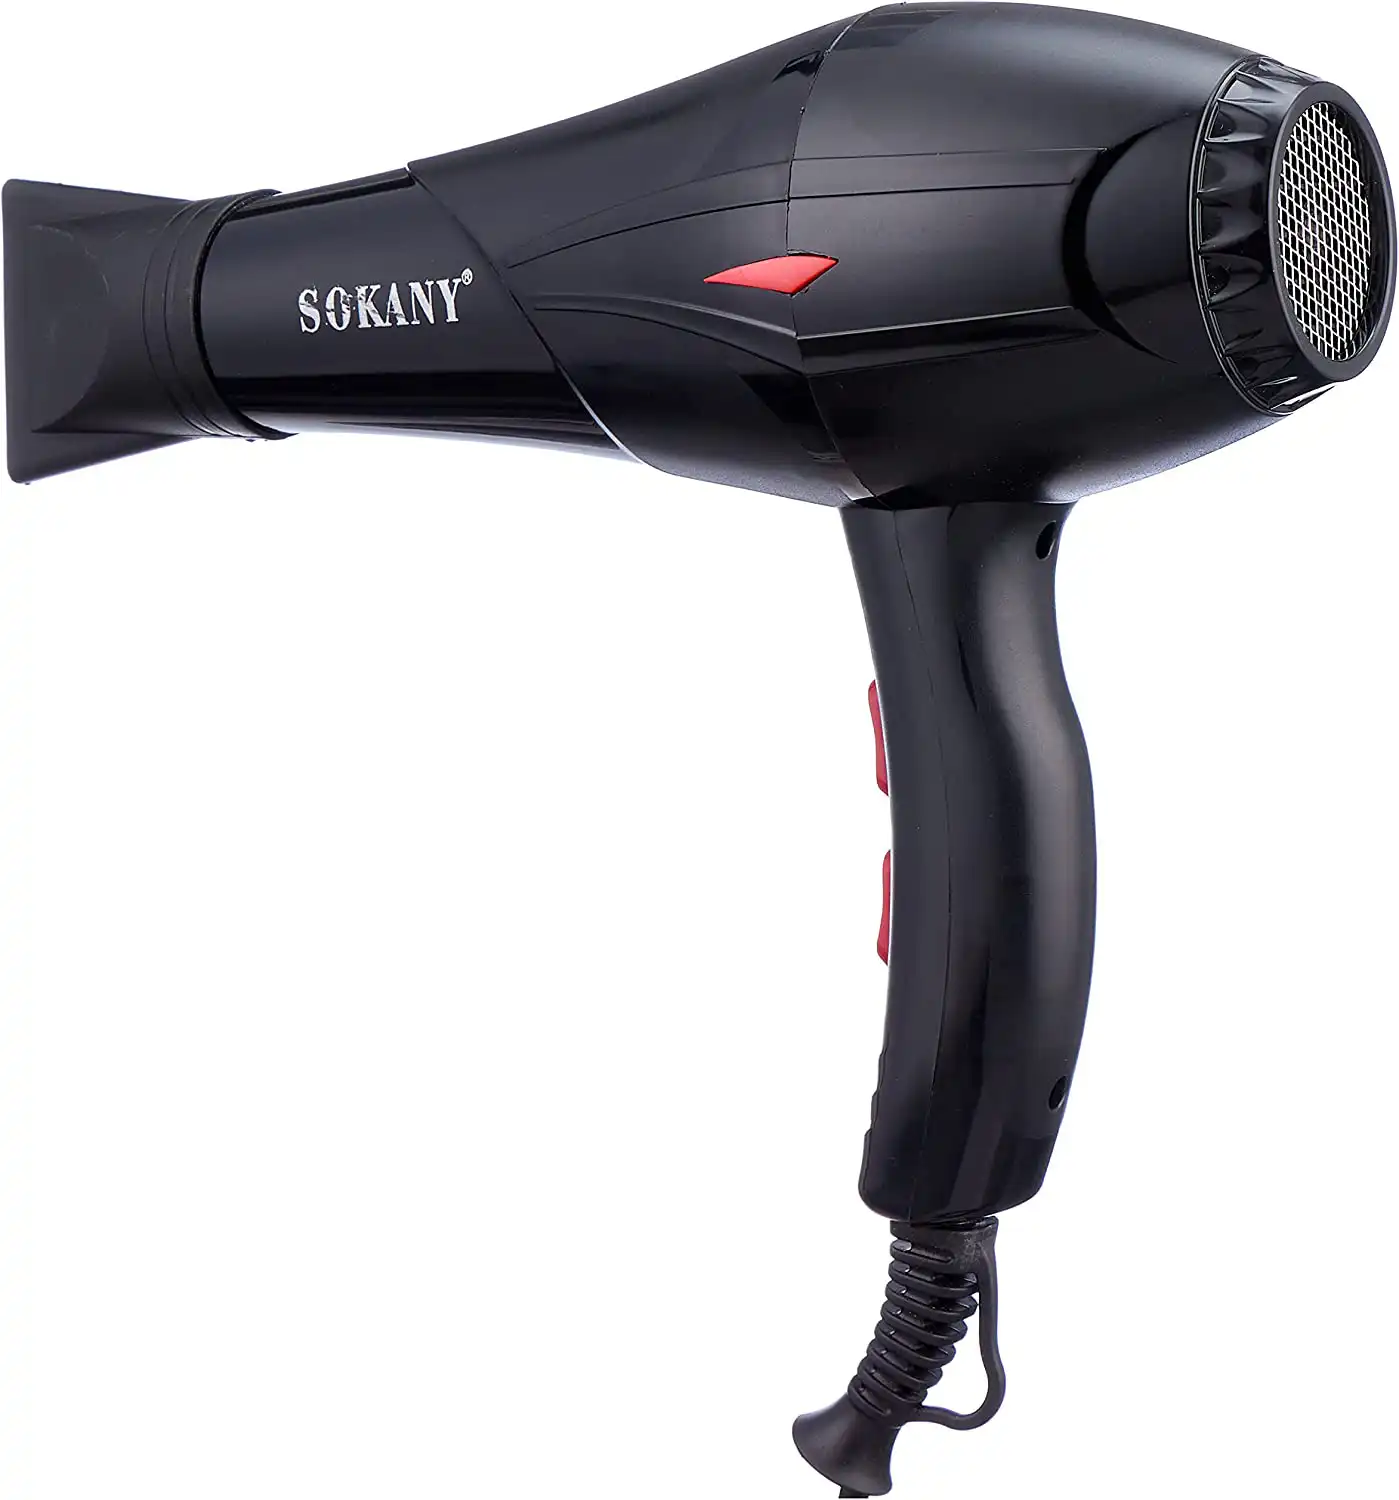 Sokany hair dryer, 2300 watt, 2 speeds, black, HS-3890